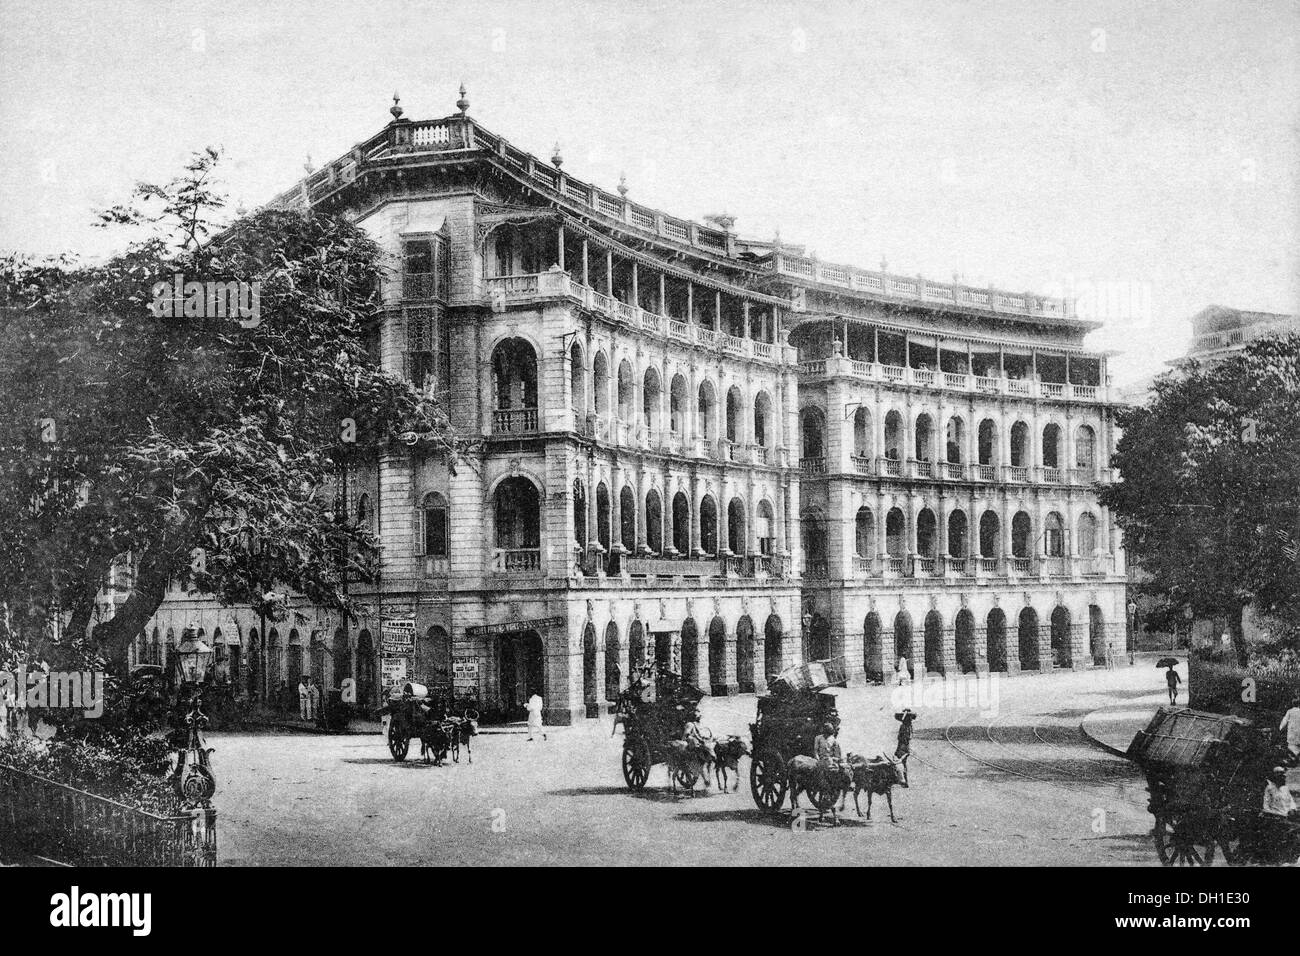 Old vintage des années 1900 Elphinstone circle Bombay Mumbai maharashtra Inde - aja 183408 Banque D'Images